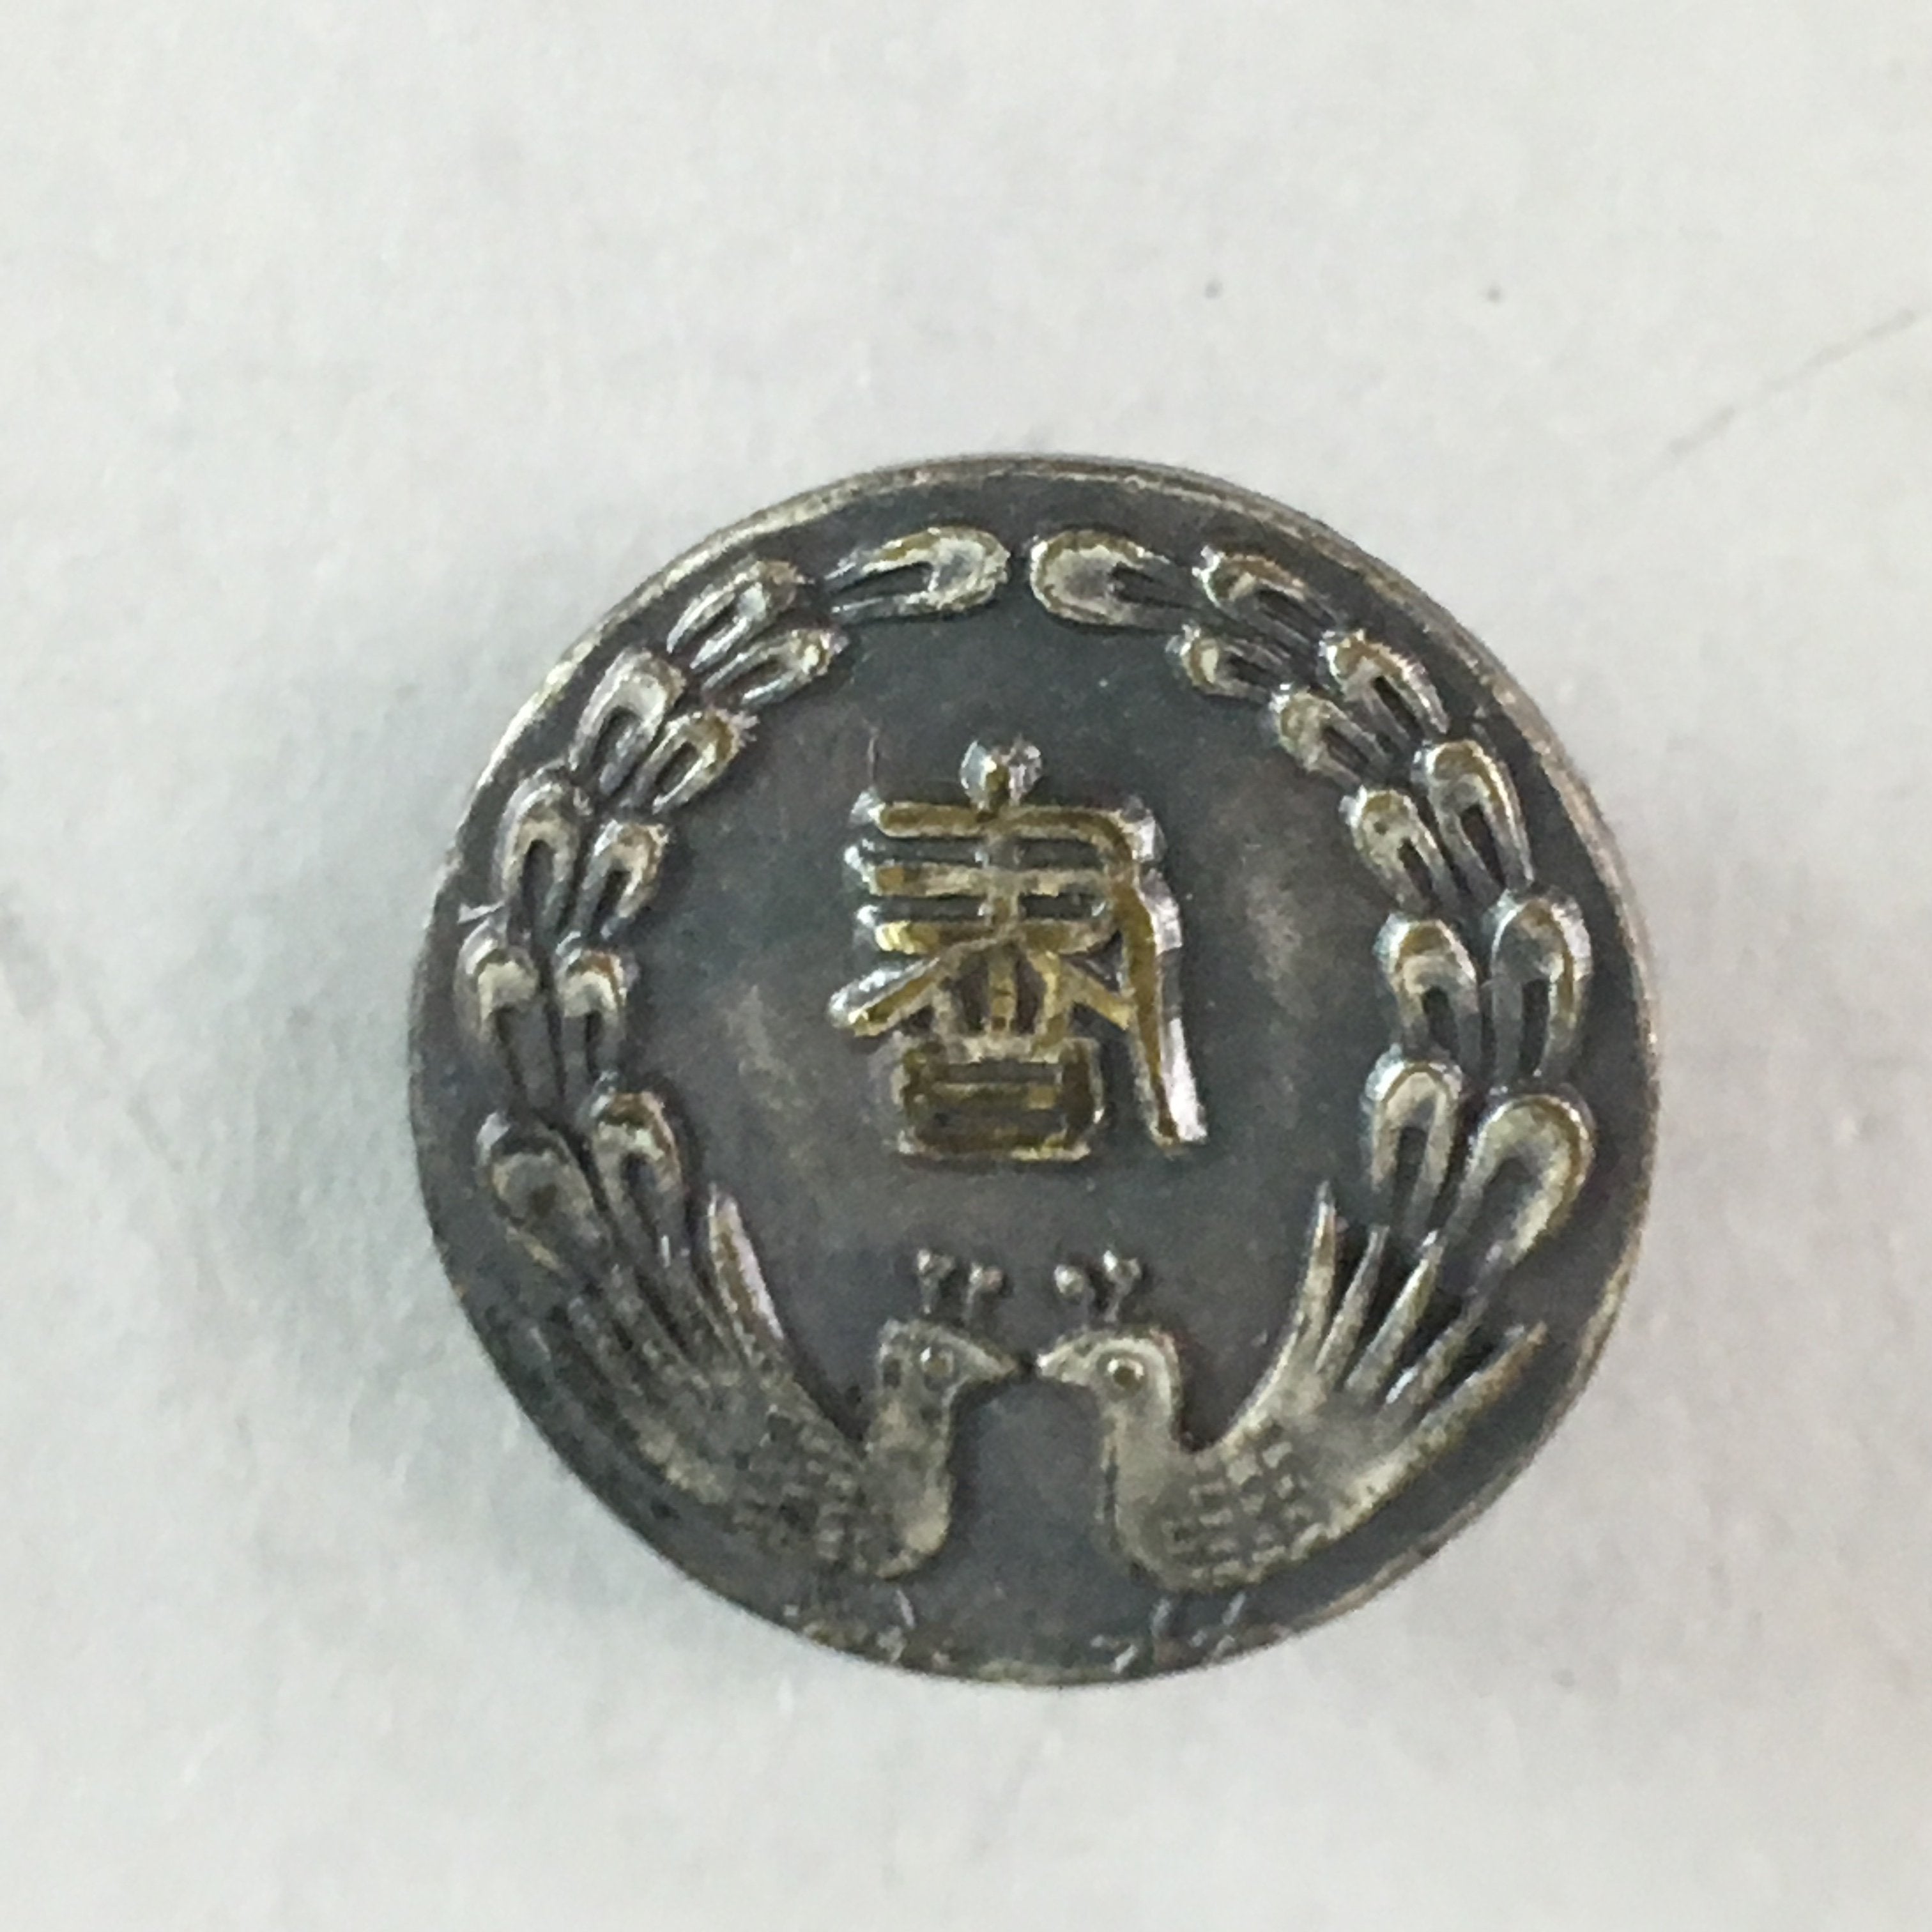 Japanese Small Badge School Lapel Pin Vtg Metal Brooch Round Peacock J720